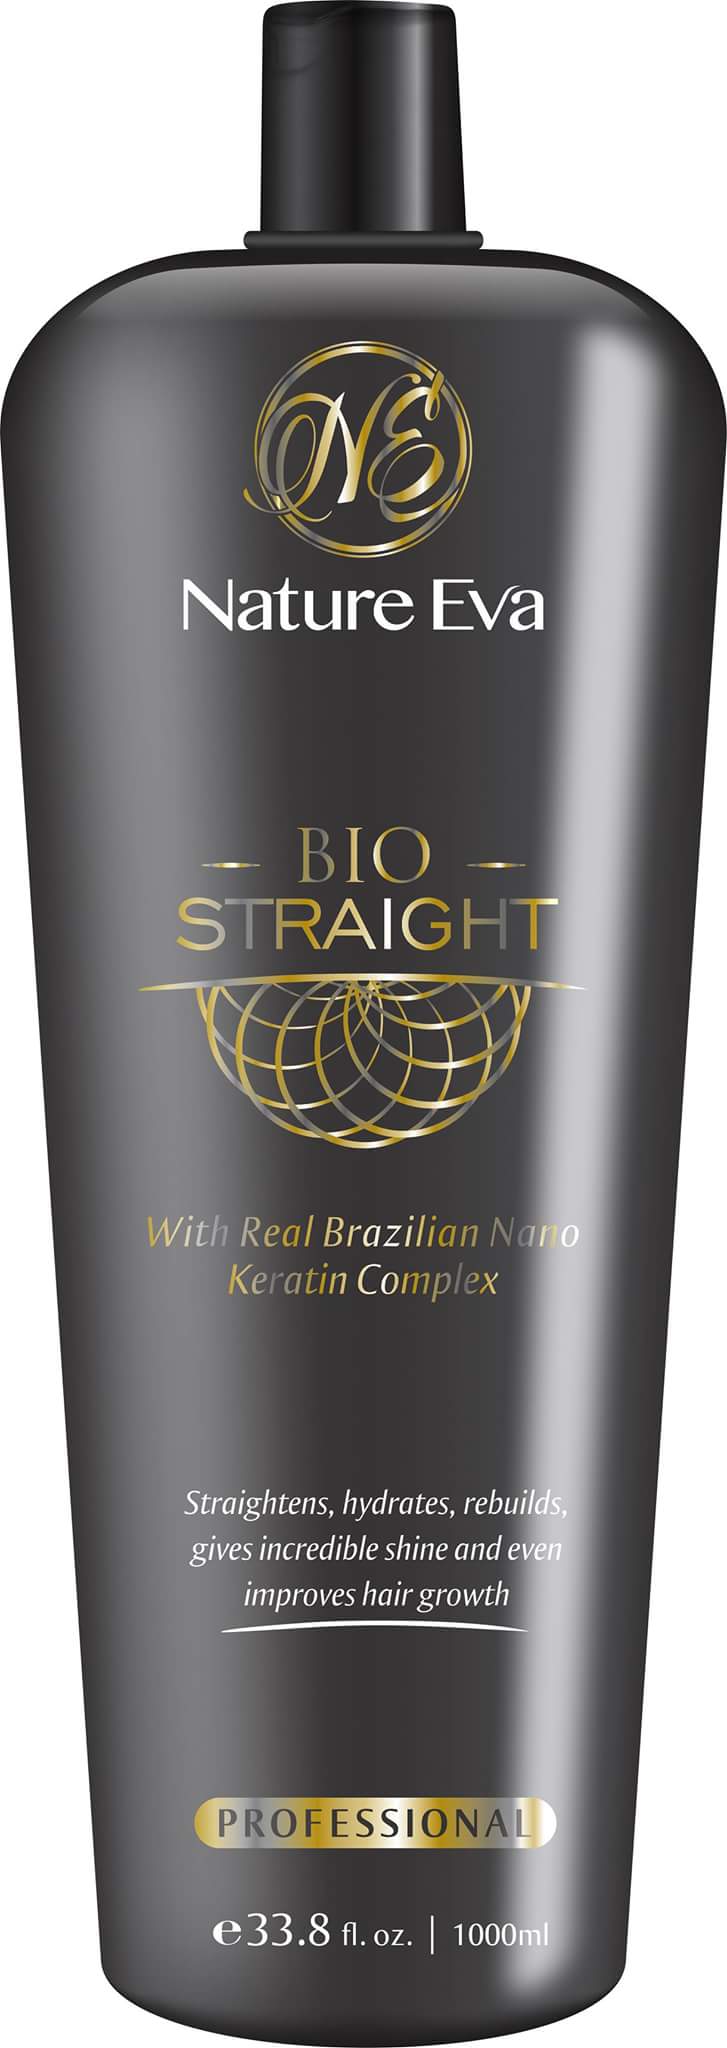 lissage brésilien Nanoplastie Bio Straight-hairstylist-le-lab-montpellier